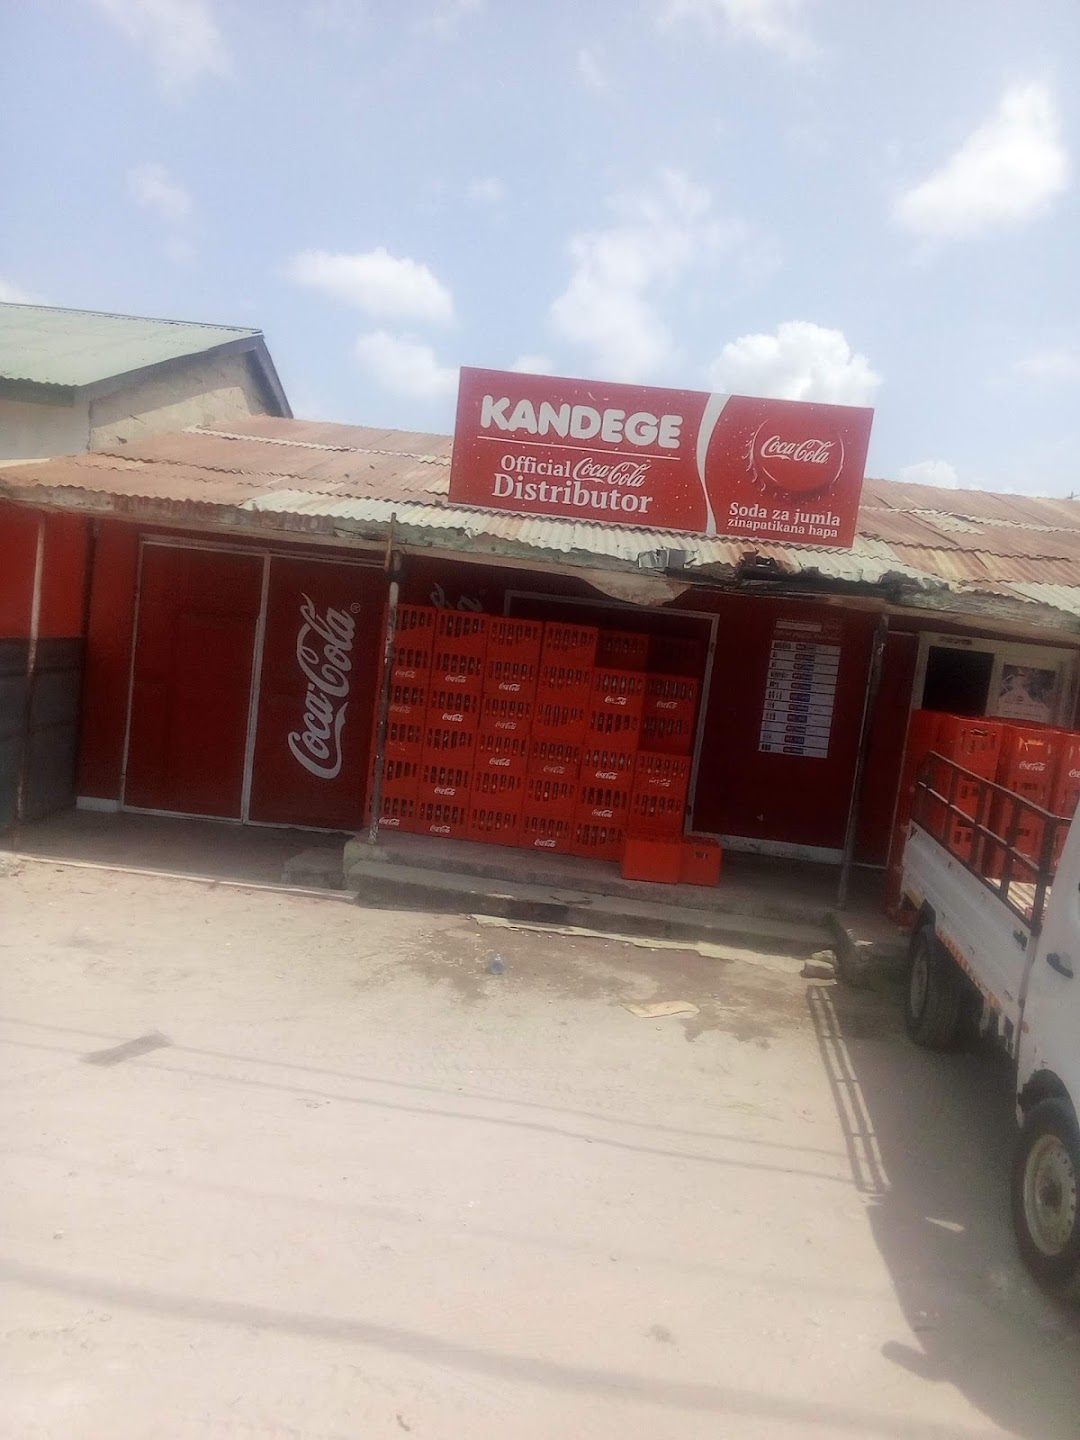 Kandege Cocacola Distribution